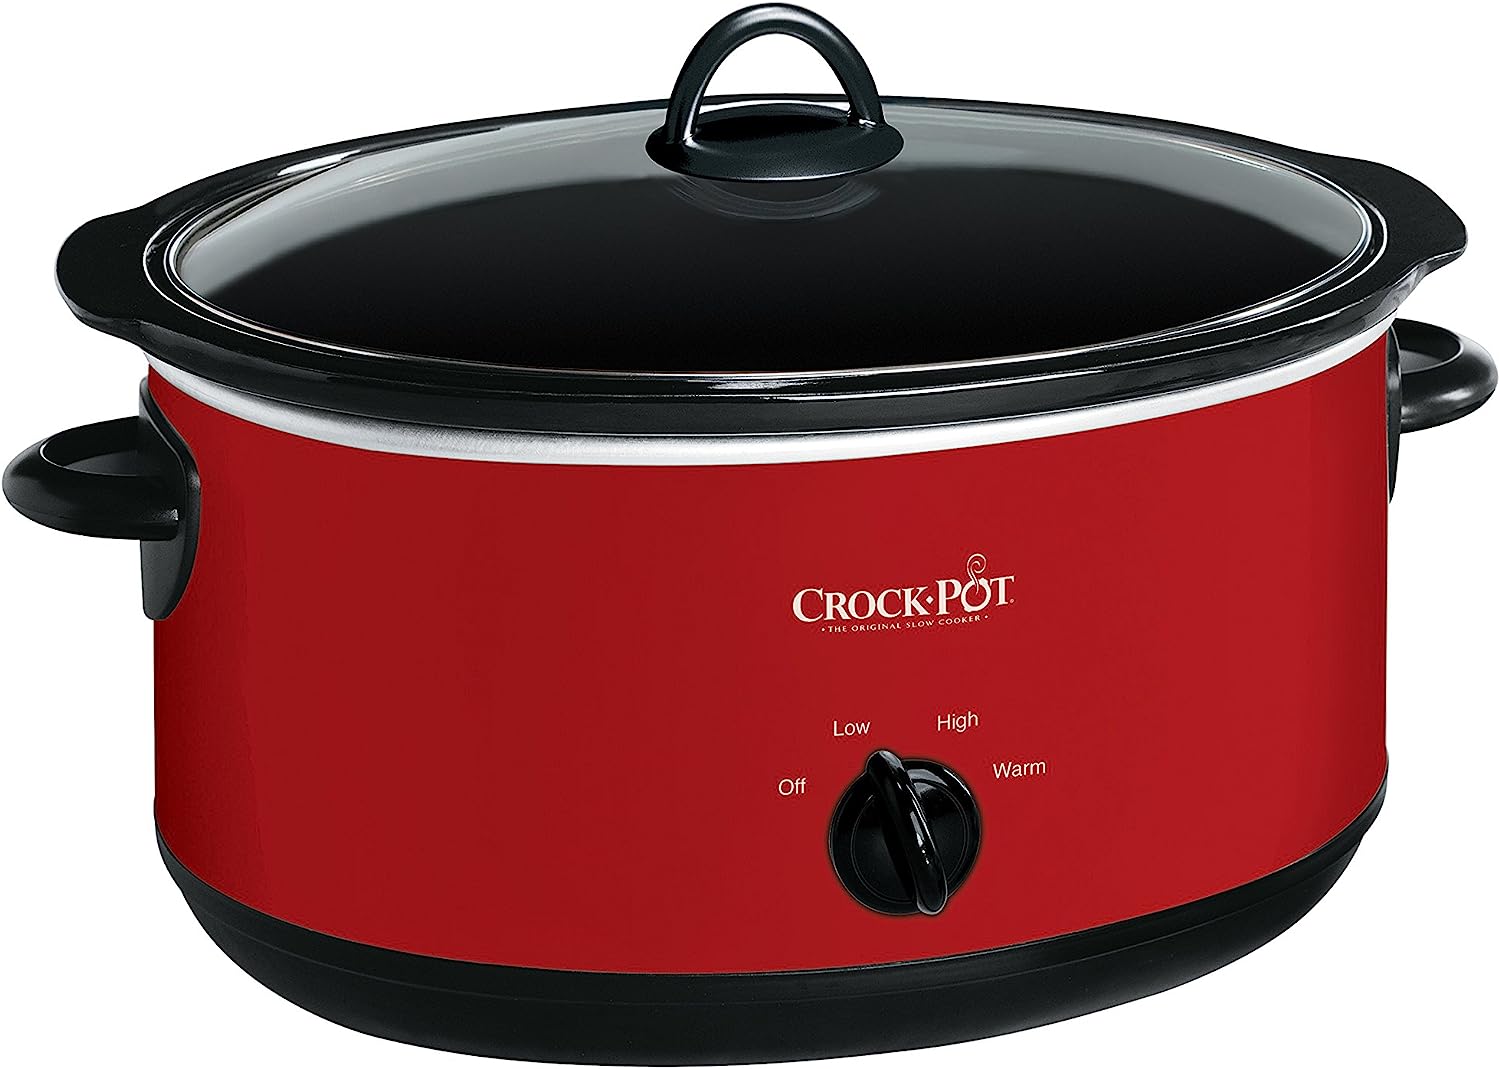 Crock-Pot Large 8 Quart Express Crock Slow Cooker and Food Warmer